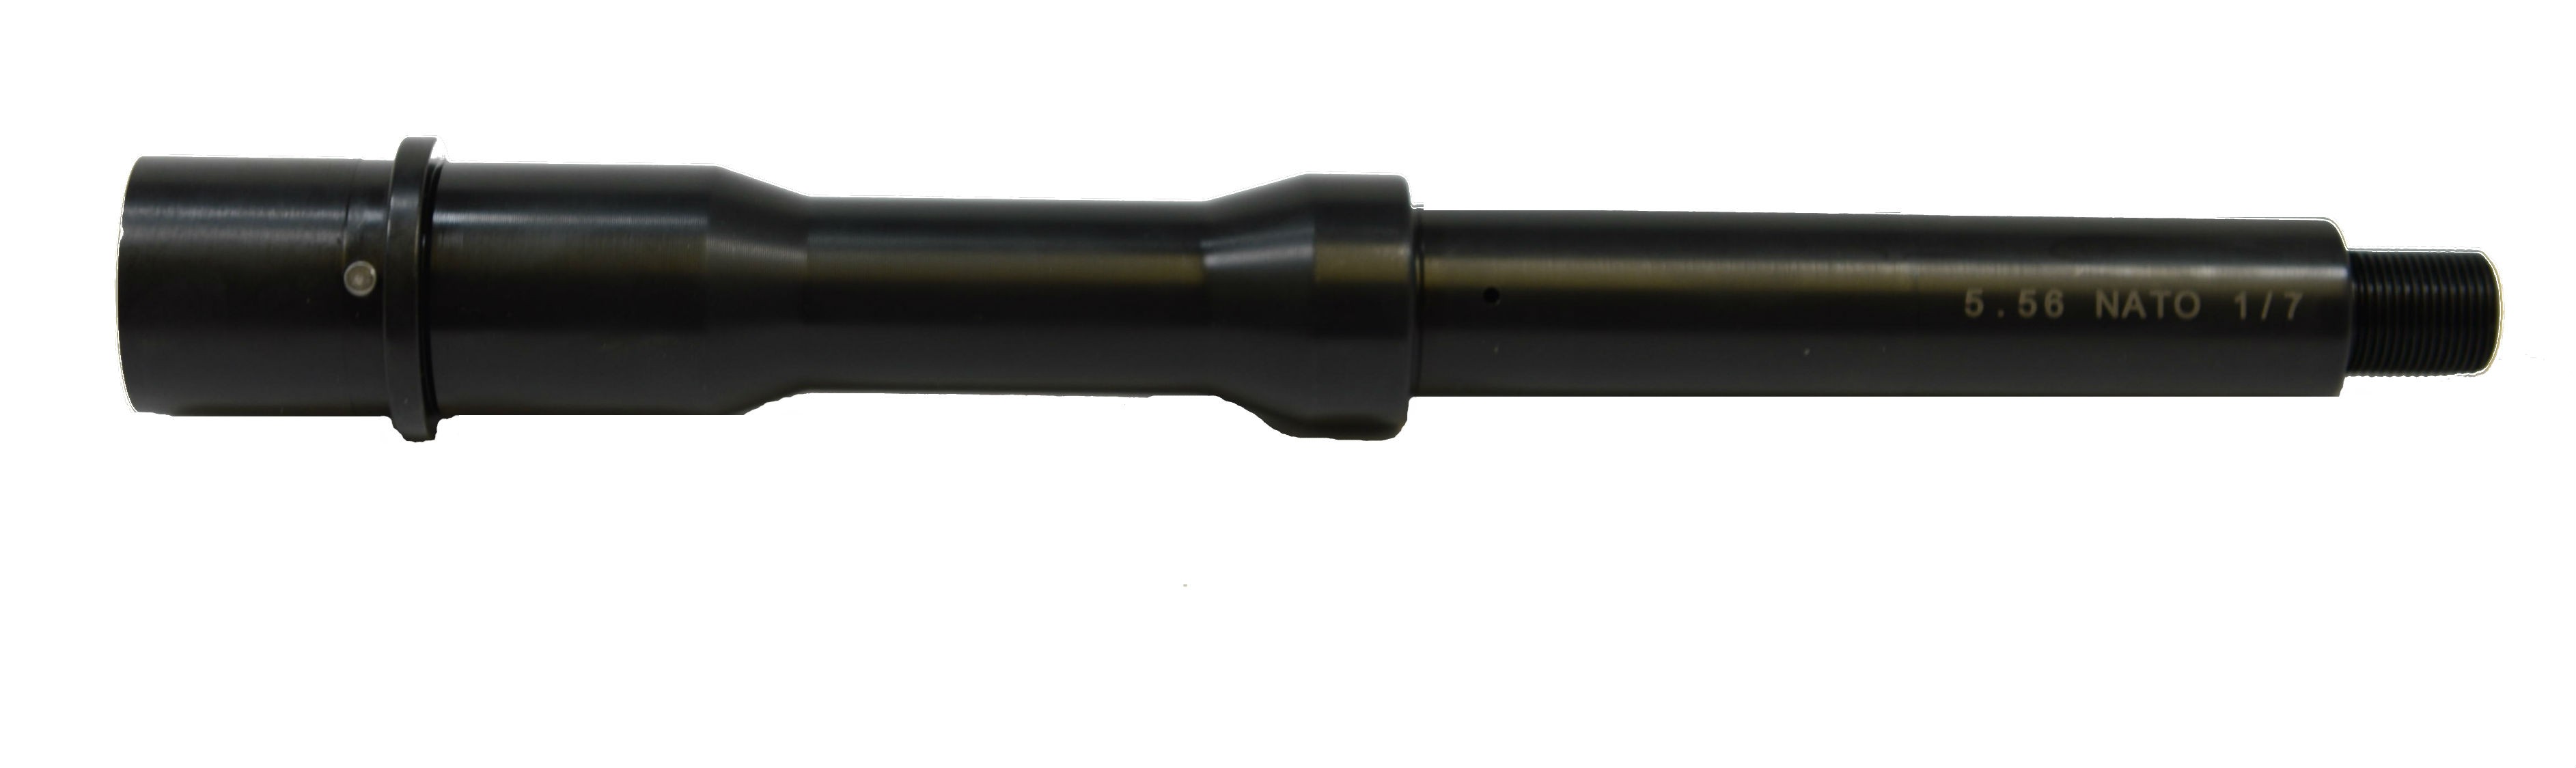 PSA AR15 8.5" 5.56 NATO 1:7 Pistol Length Nitride Barrel " 5.56 NATO 1/7 " - 77932926